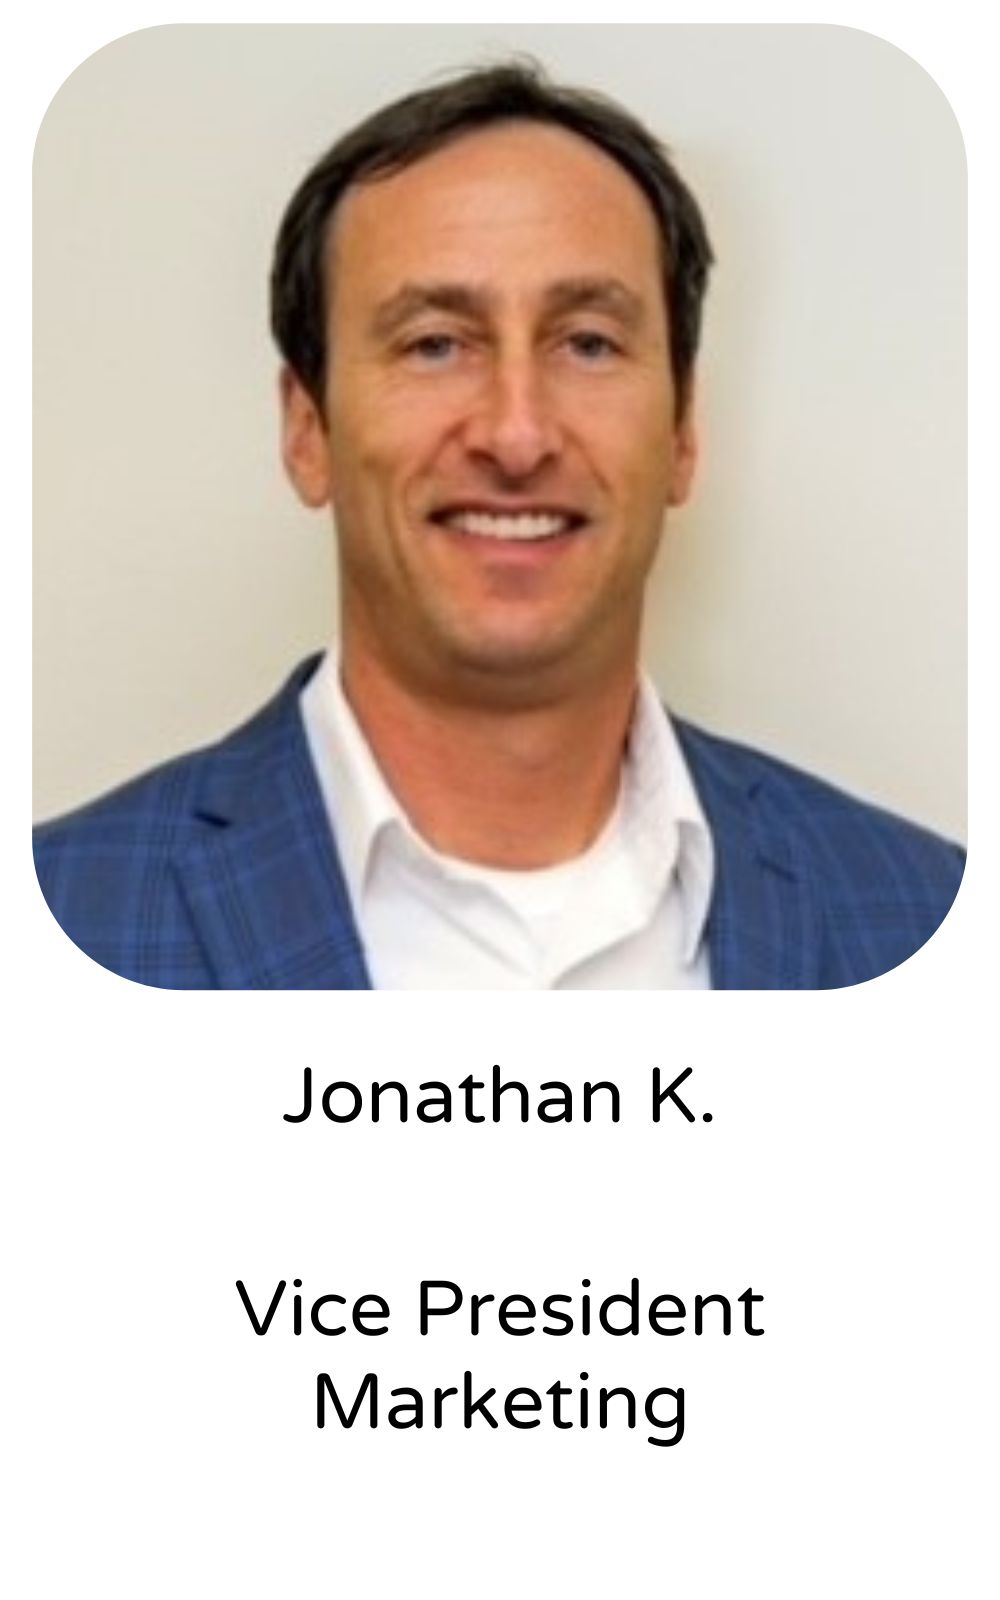 Jonathan K, Vice President, Marketing